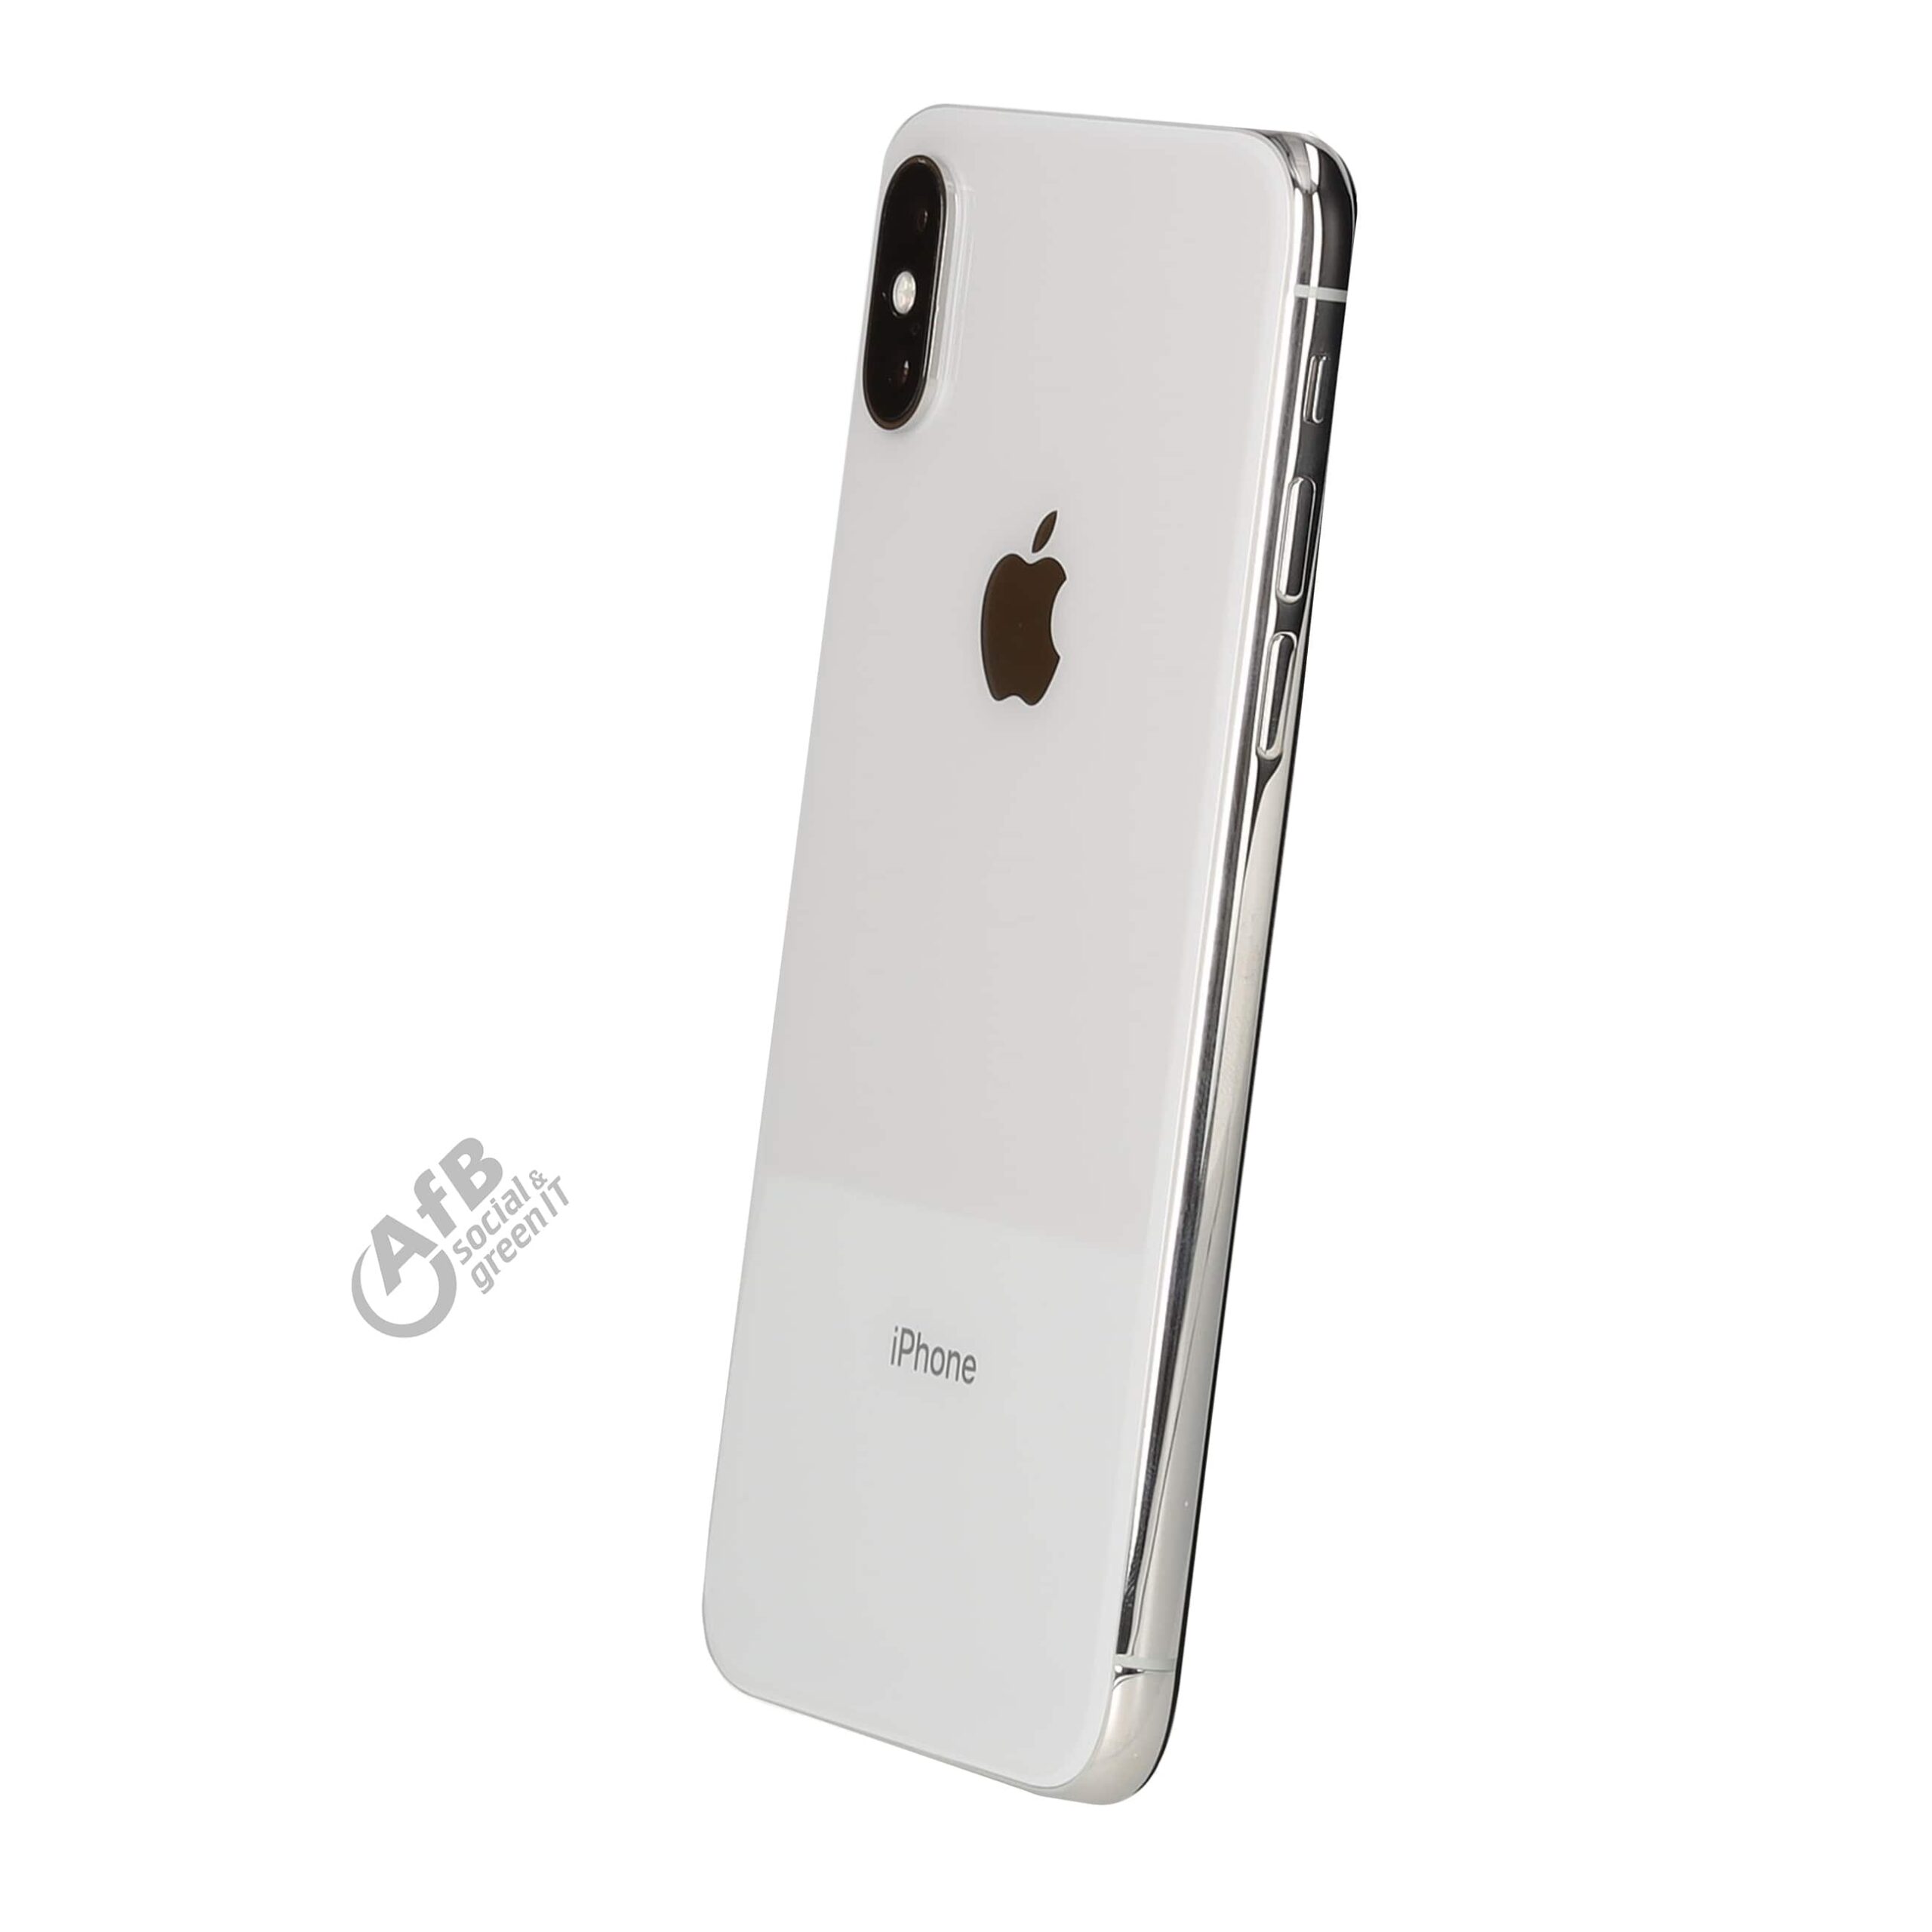 Apple iPhone XSehr gut – AfB-refurbished